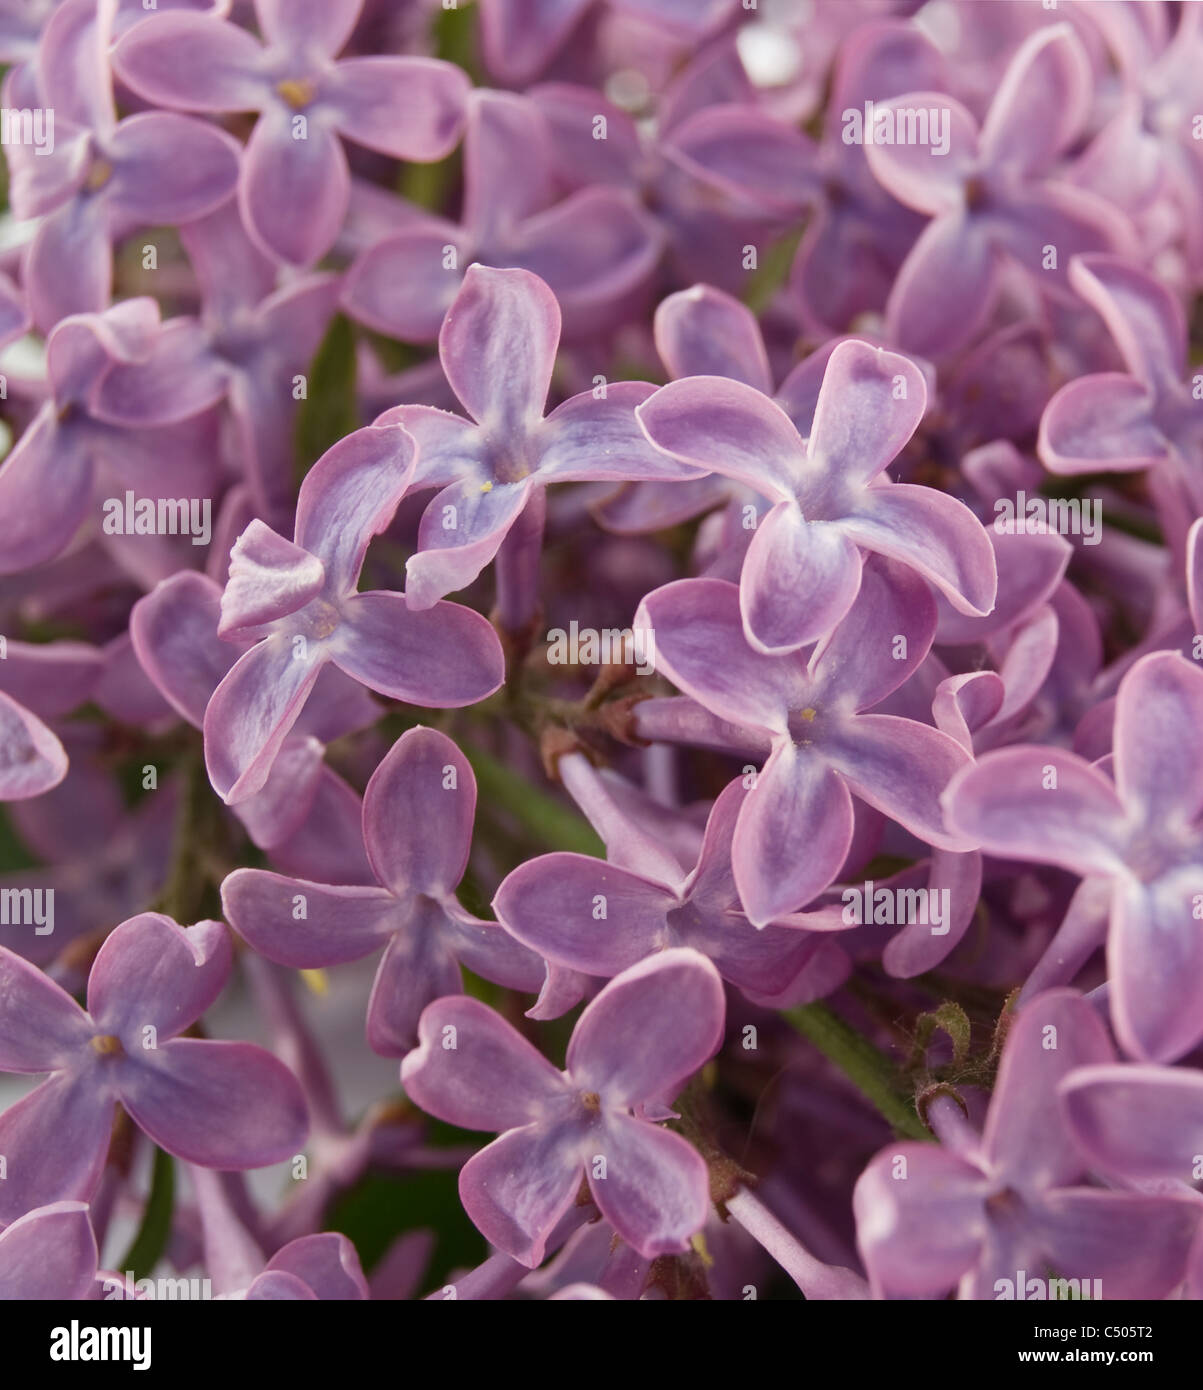 Fond de fleurs lilas - dof peu profondes Banque D'Images